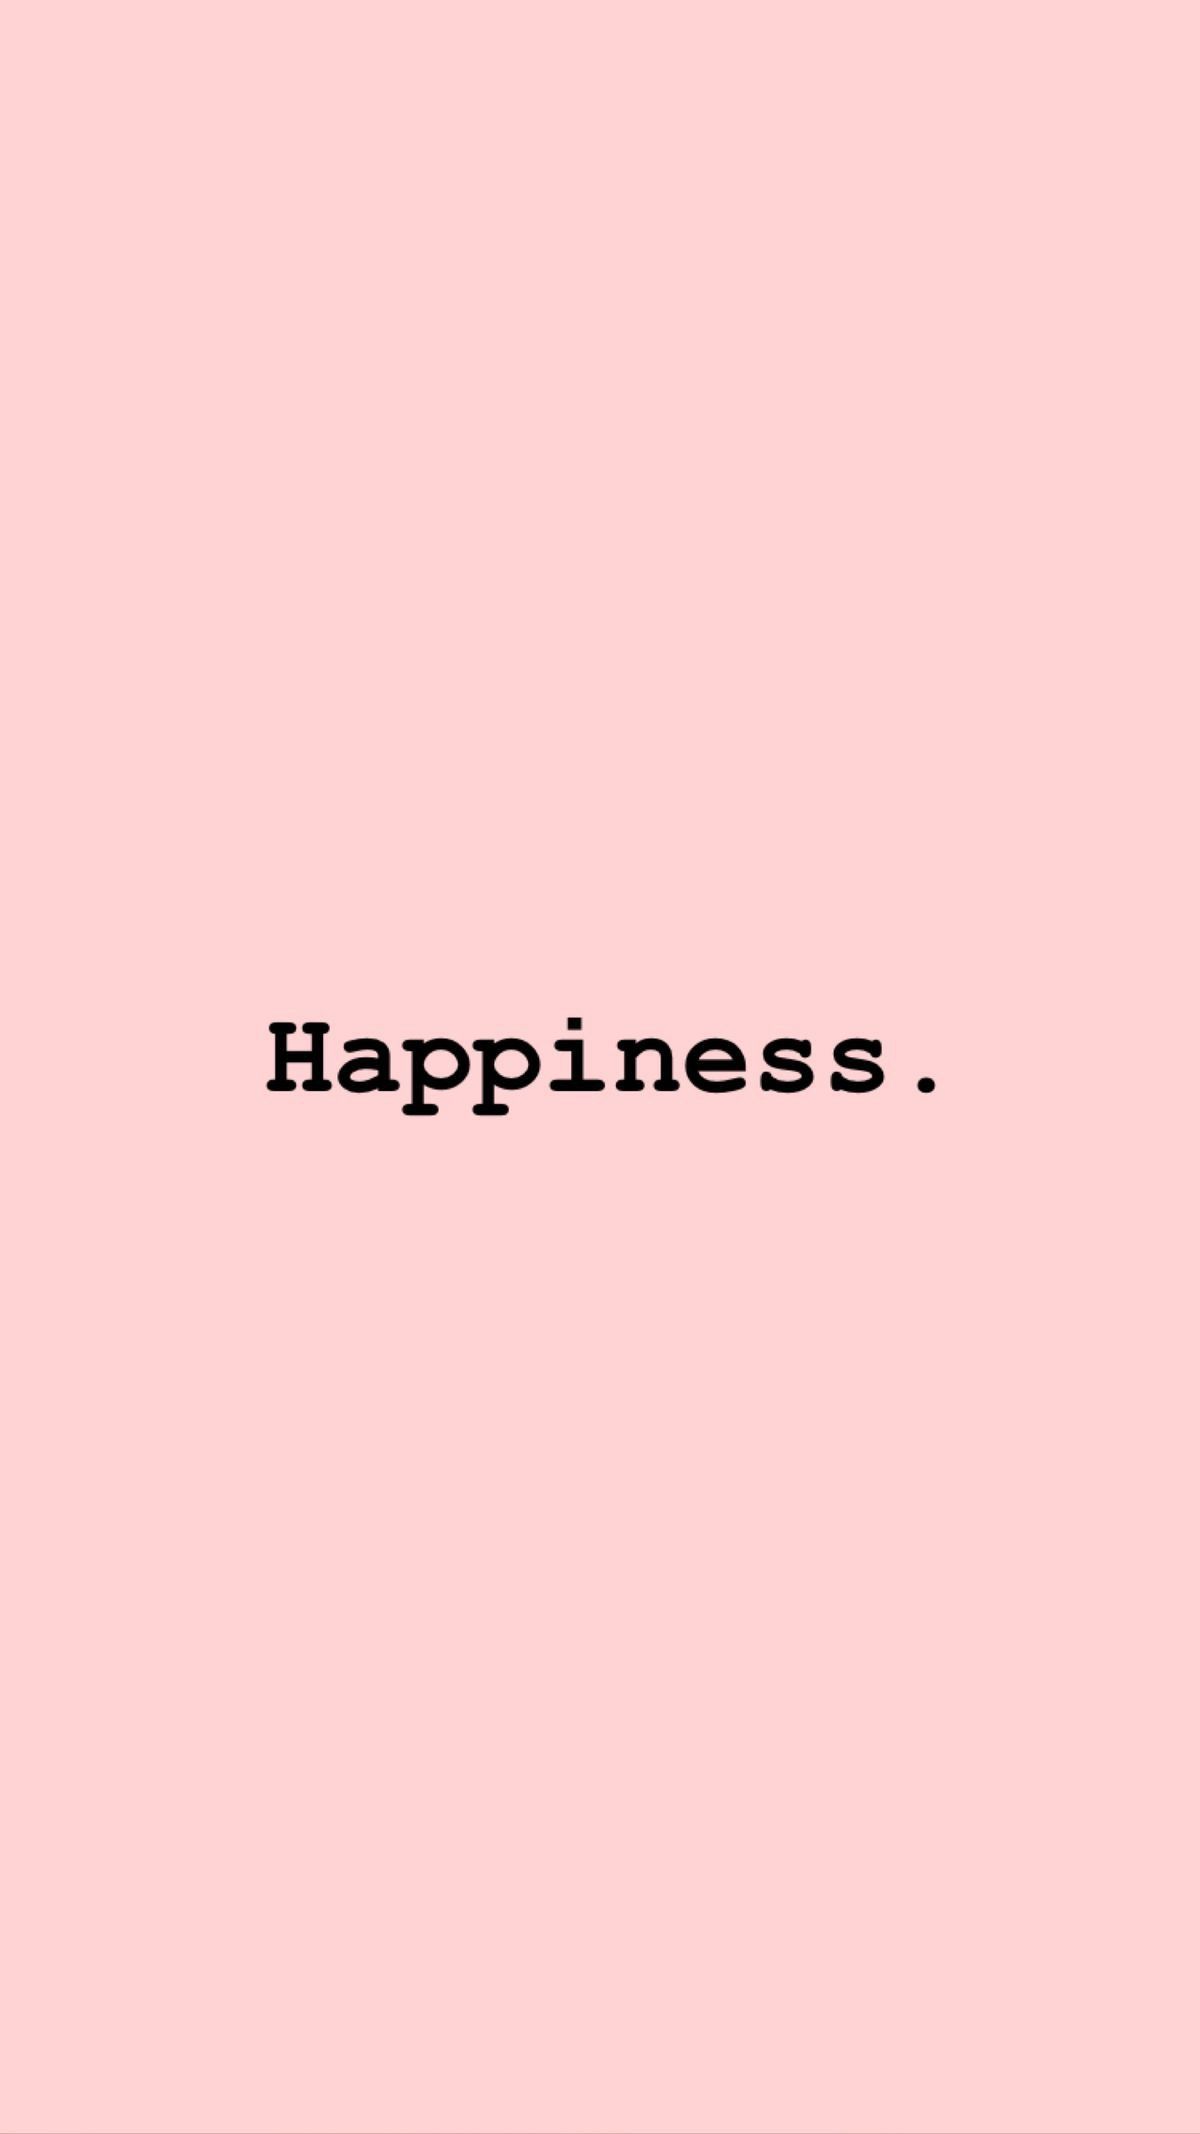 Happiness wallpaper.#wallpaperideas. Wallpaper quotes, Wallpaper iphone cute, iPhone wallpaper